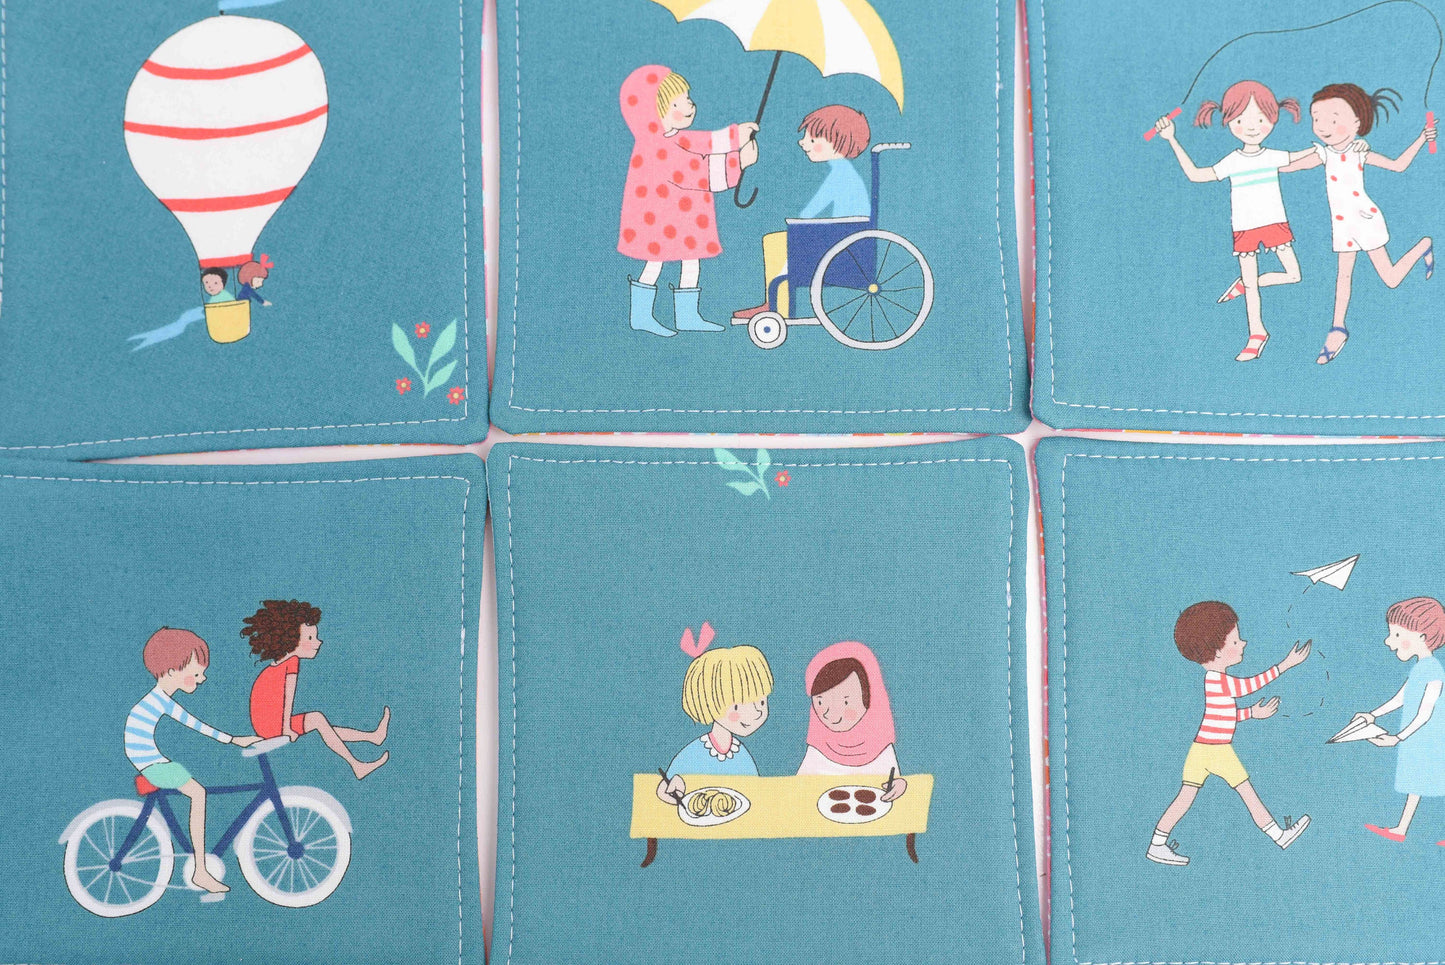 Inclusive Children Reversible Fabric Coasters- Set of 6